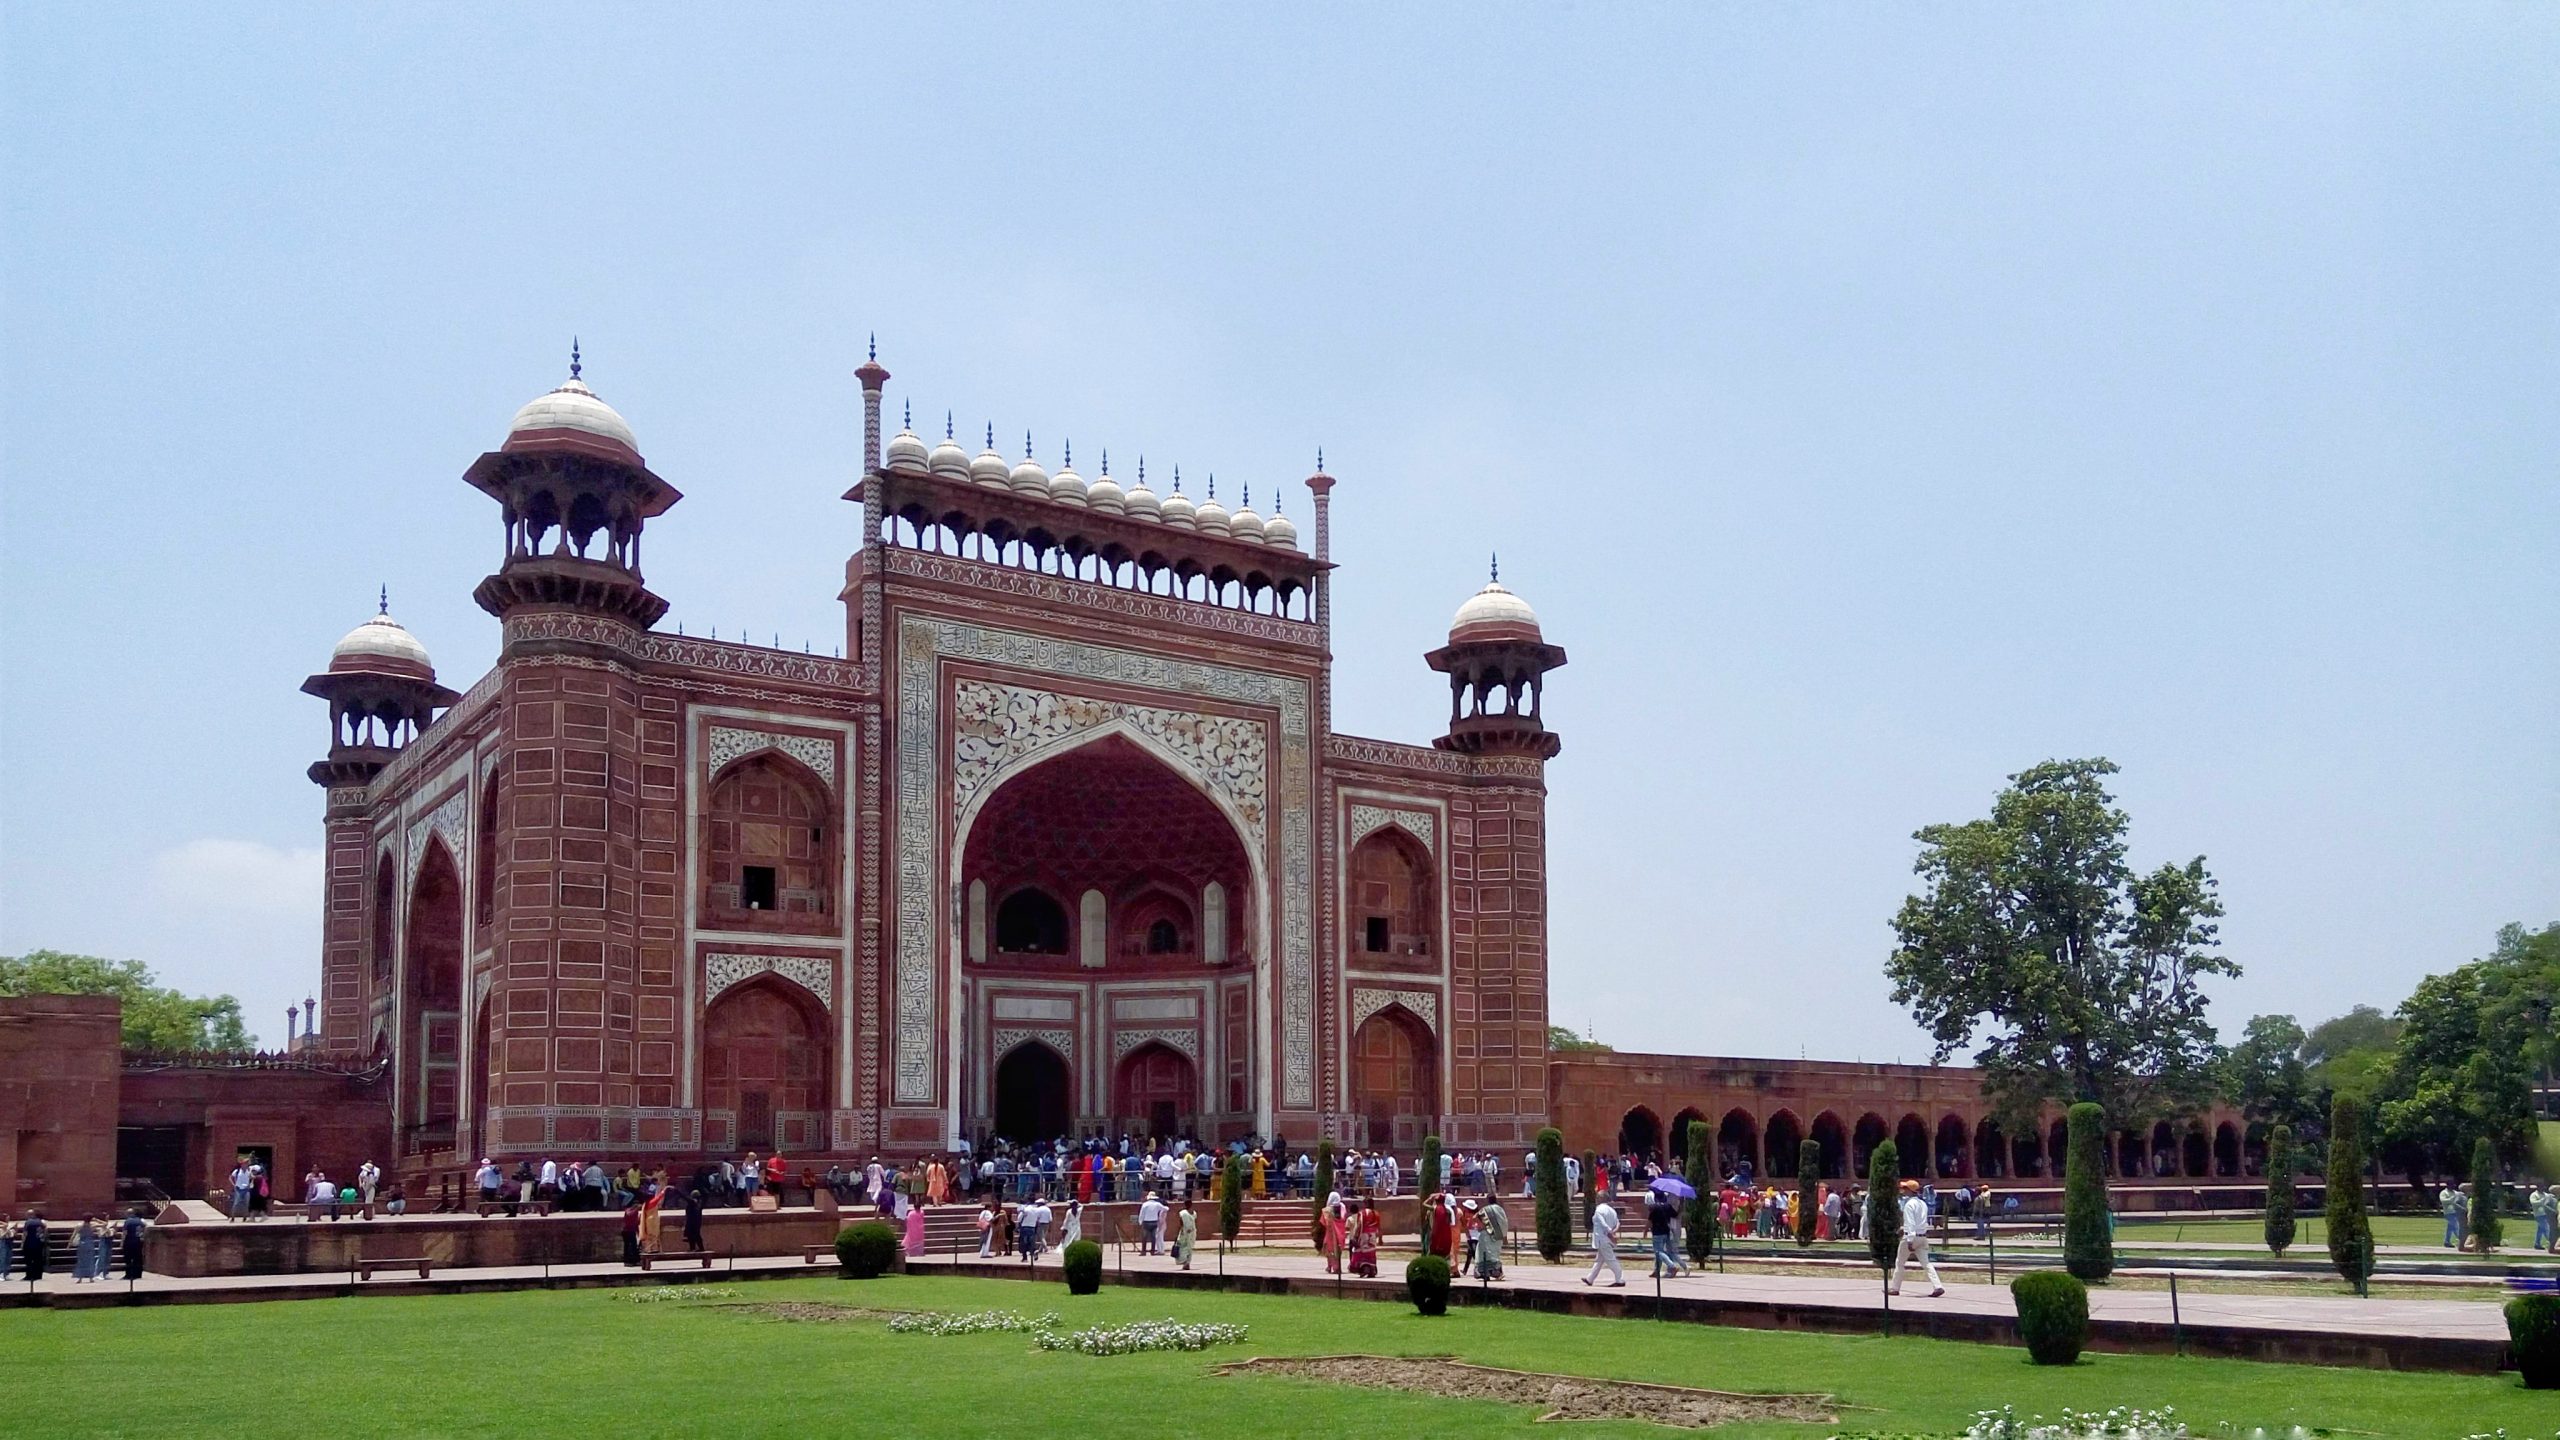 Entrance gate of Taj Mahal